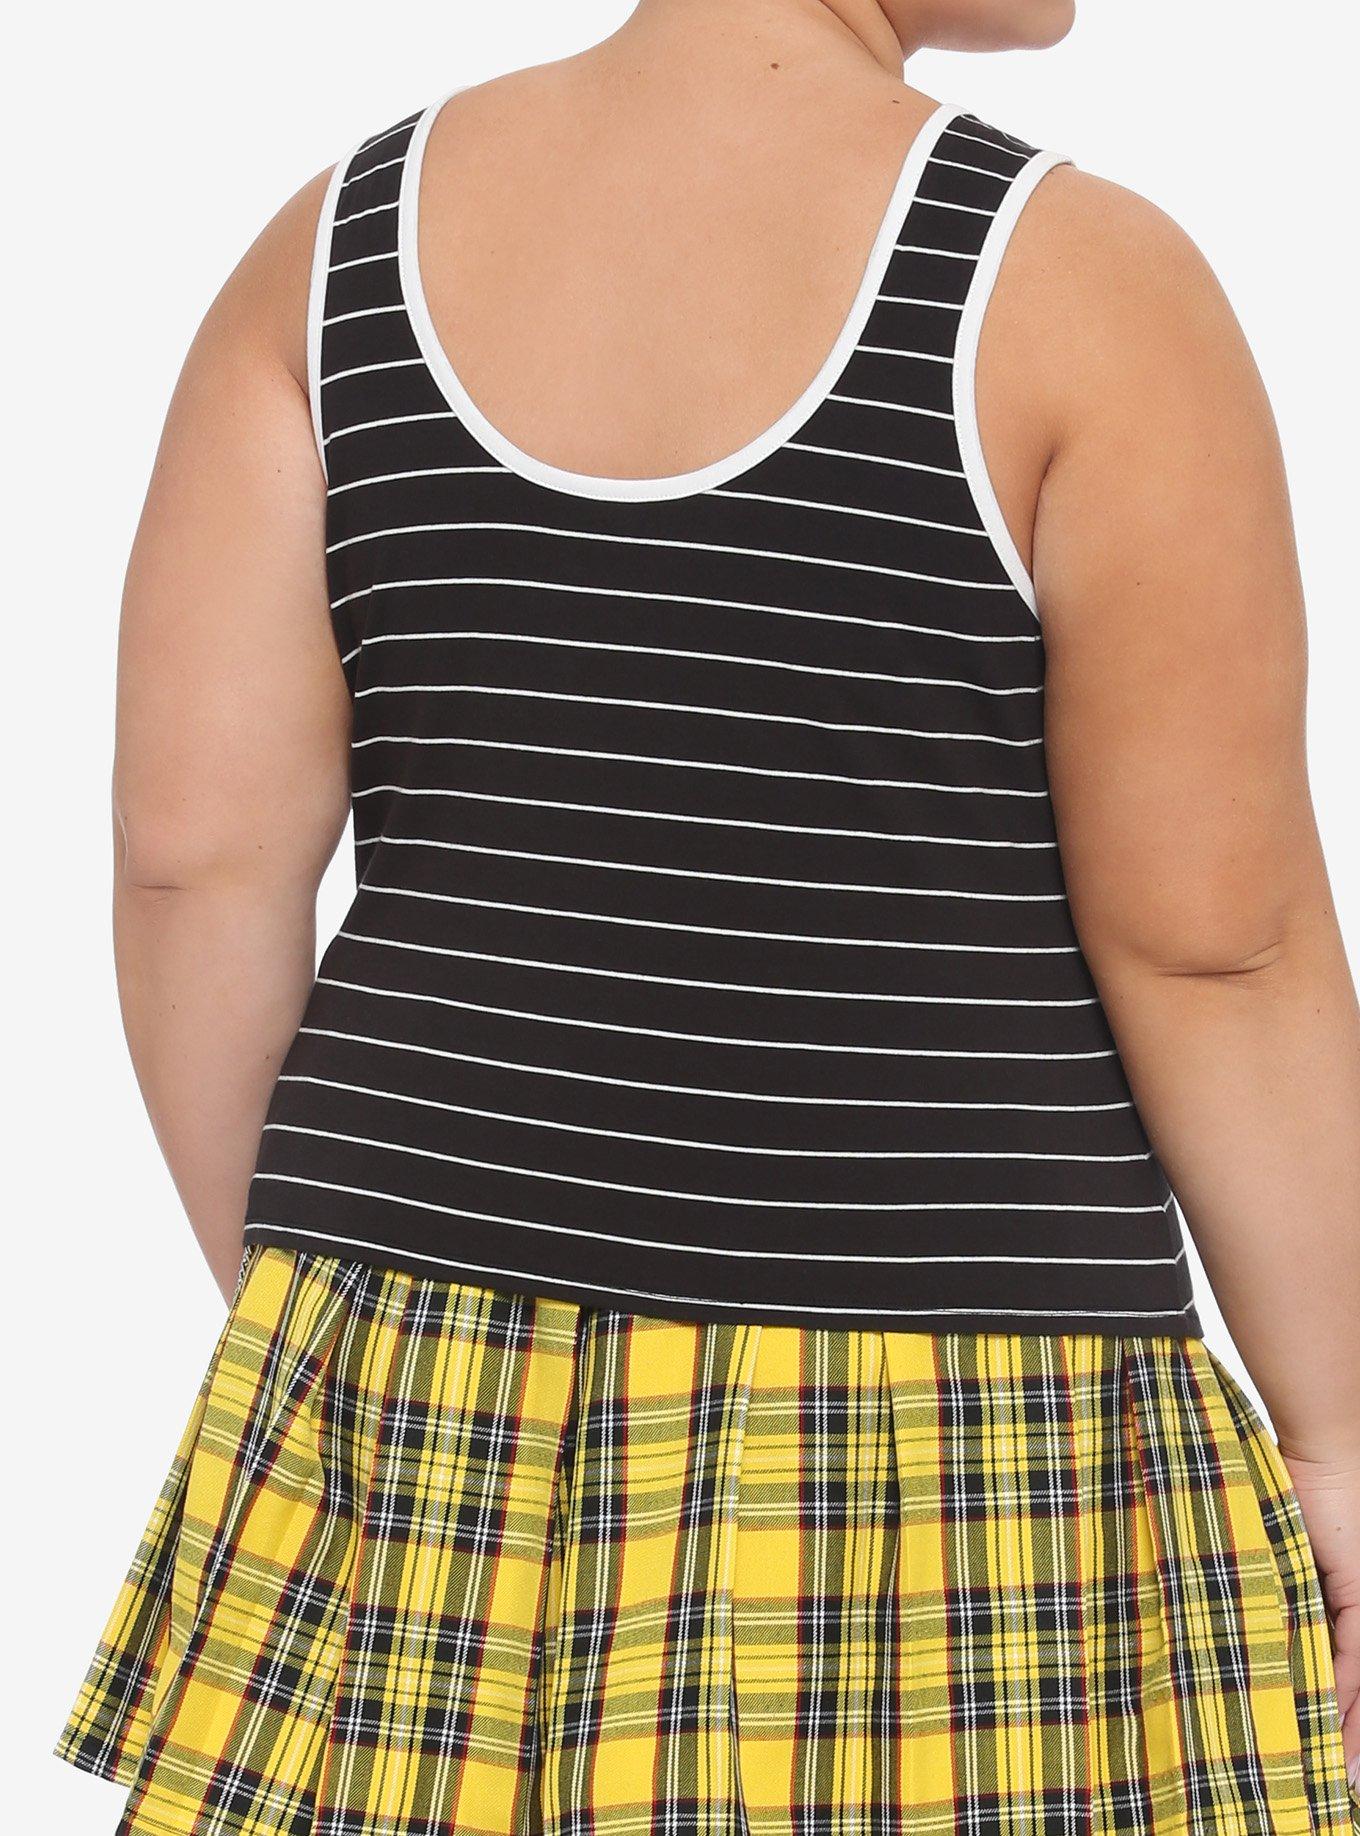 Beetlejuice Never Trust The Living Stripe Girls Tank Top Plus Size, MULTI, alternate